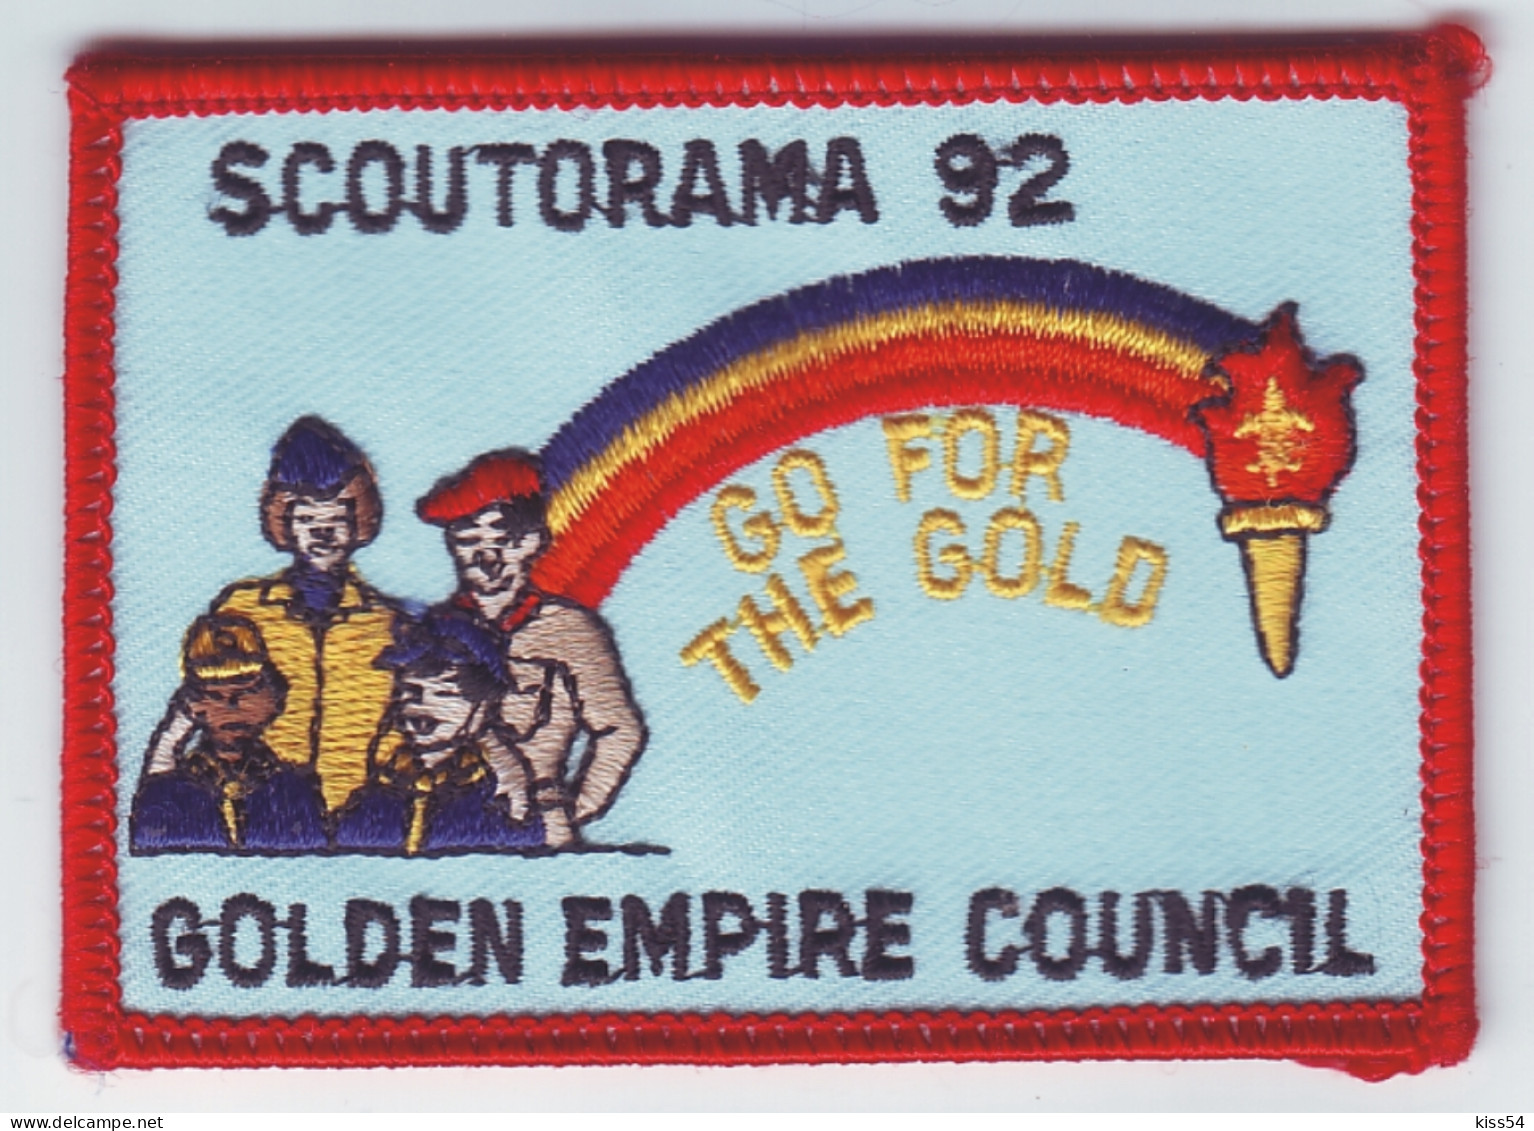 B 29 - 41 USA Scout Badge - 1992 - Padvinderij